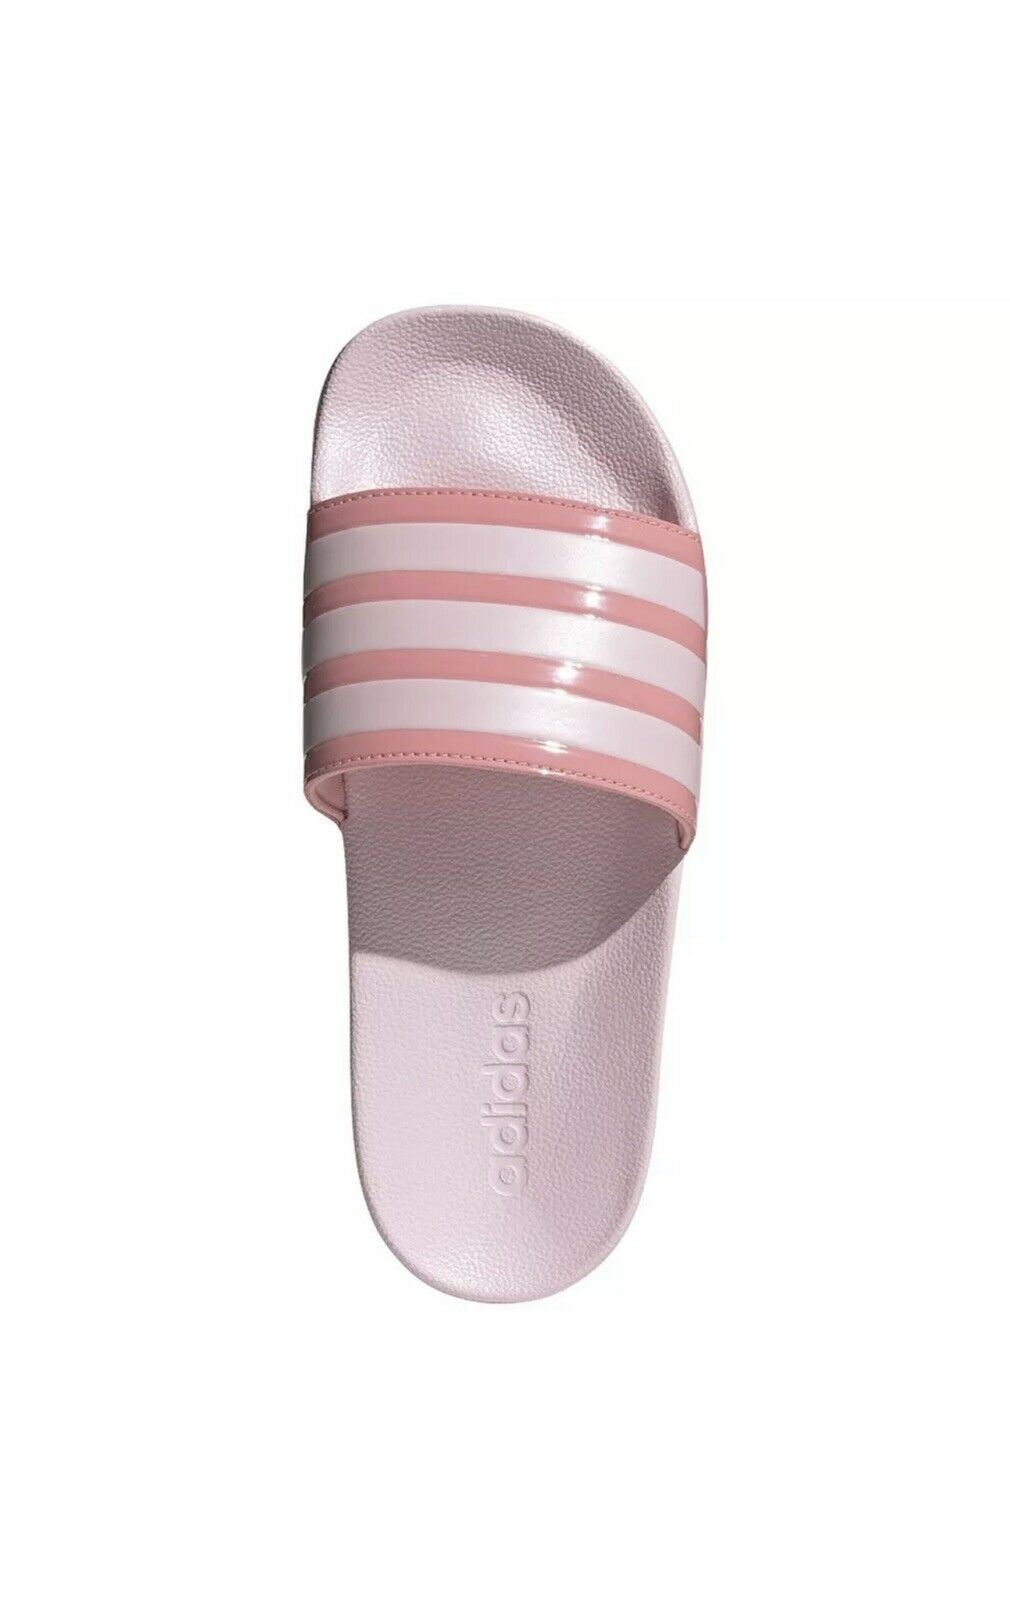 Adidas Women's Adilette Shower Slides Sandals Flip Flops * Size 9 * NEW*